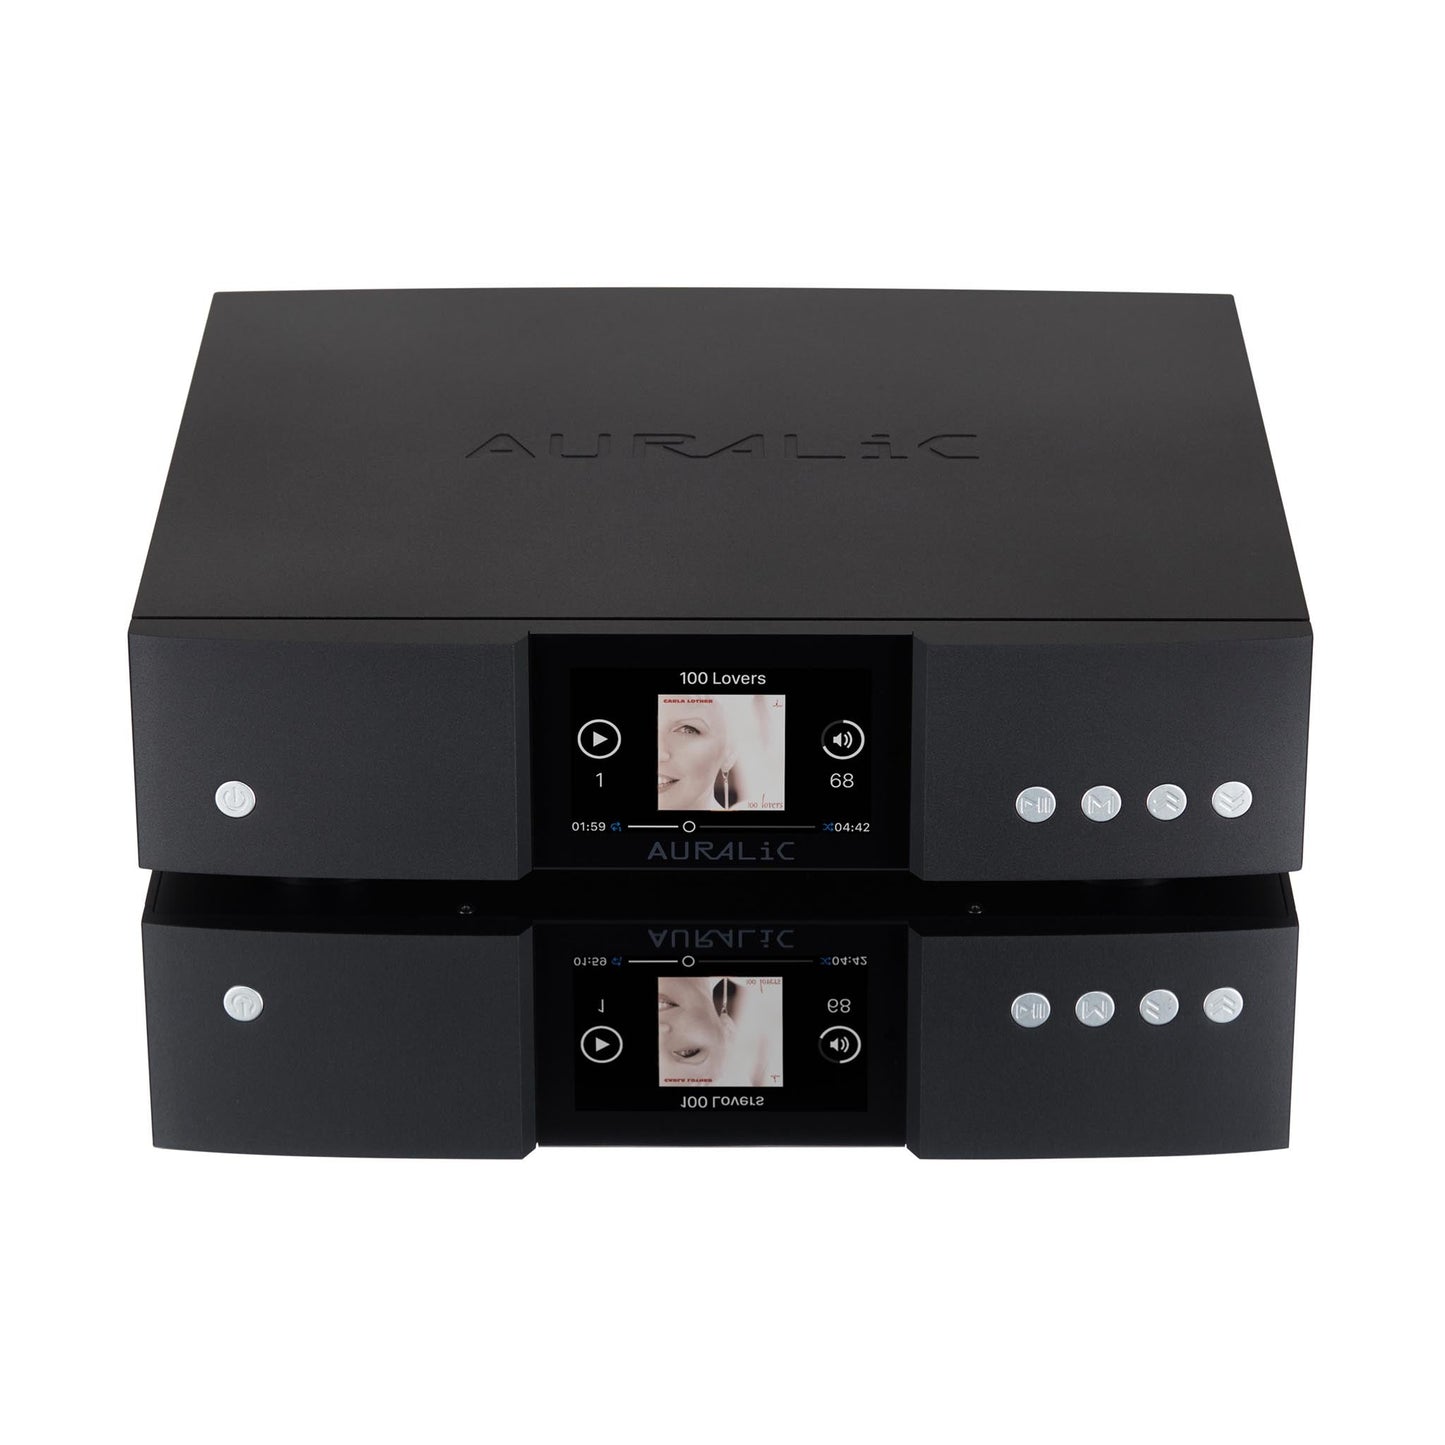 AURALiC ARIES G1 Streamer / Music Server (BLEM)